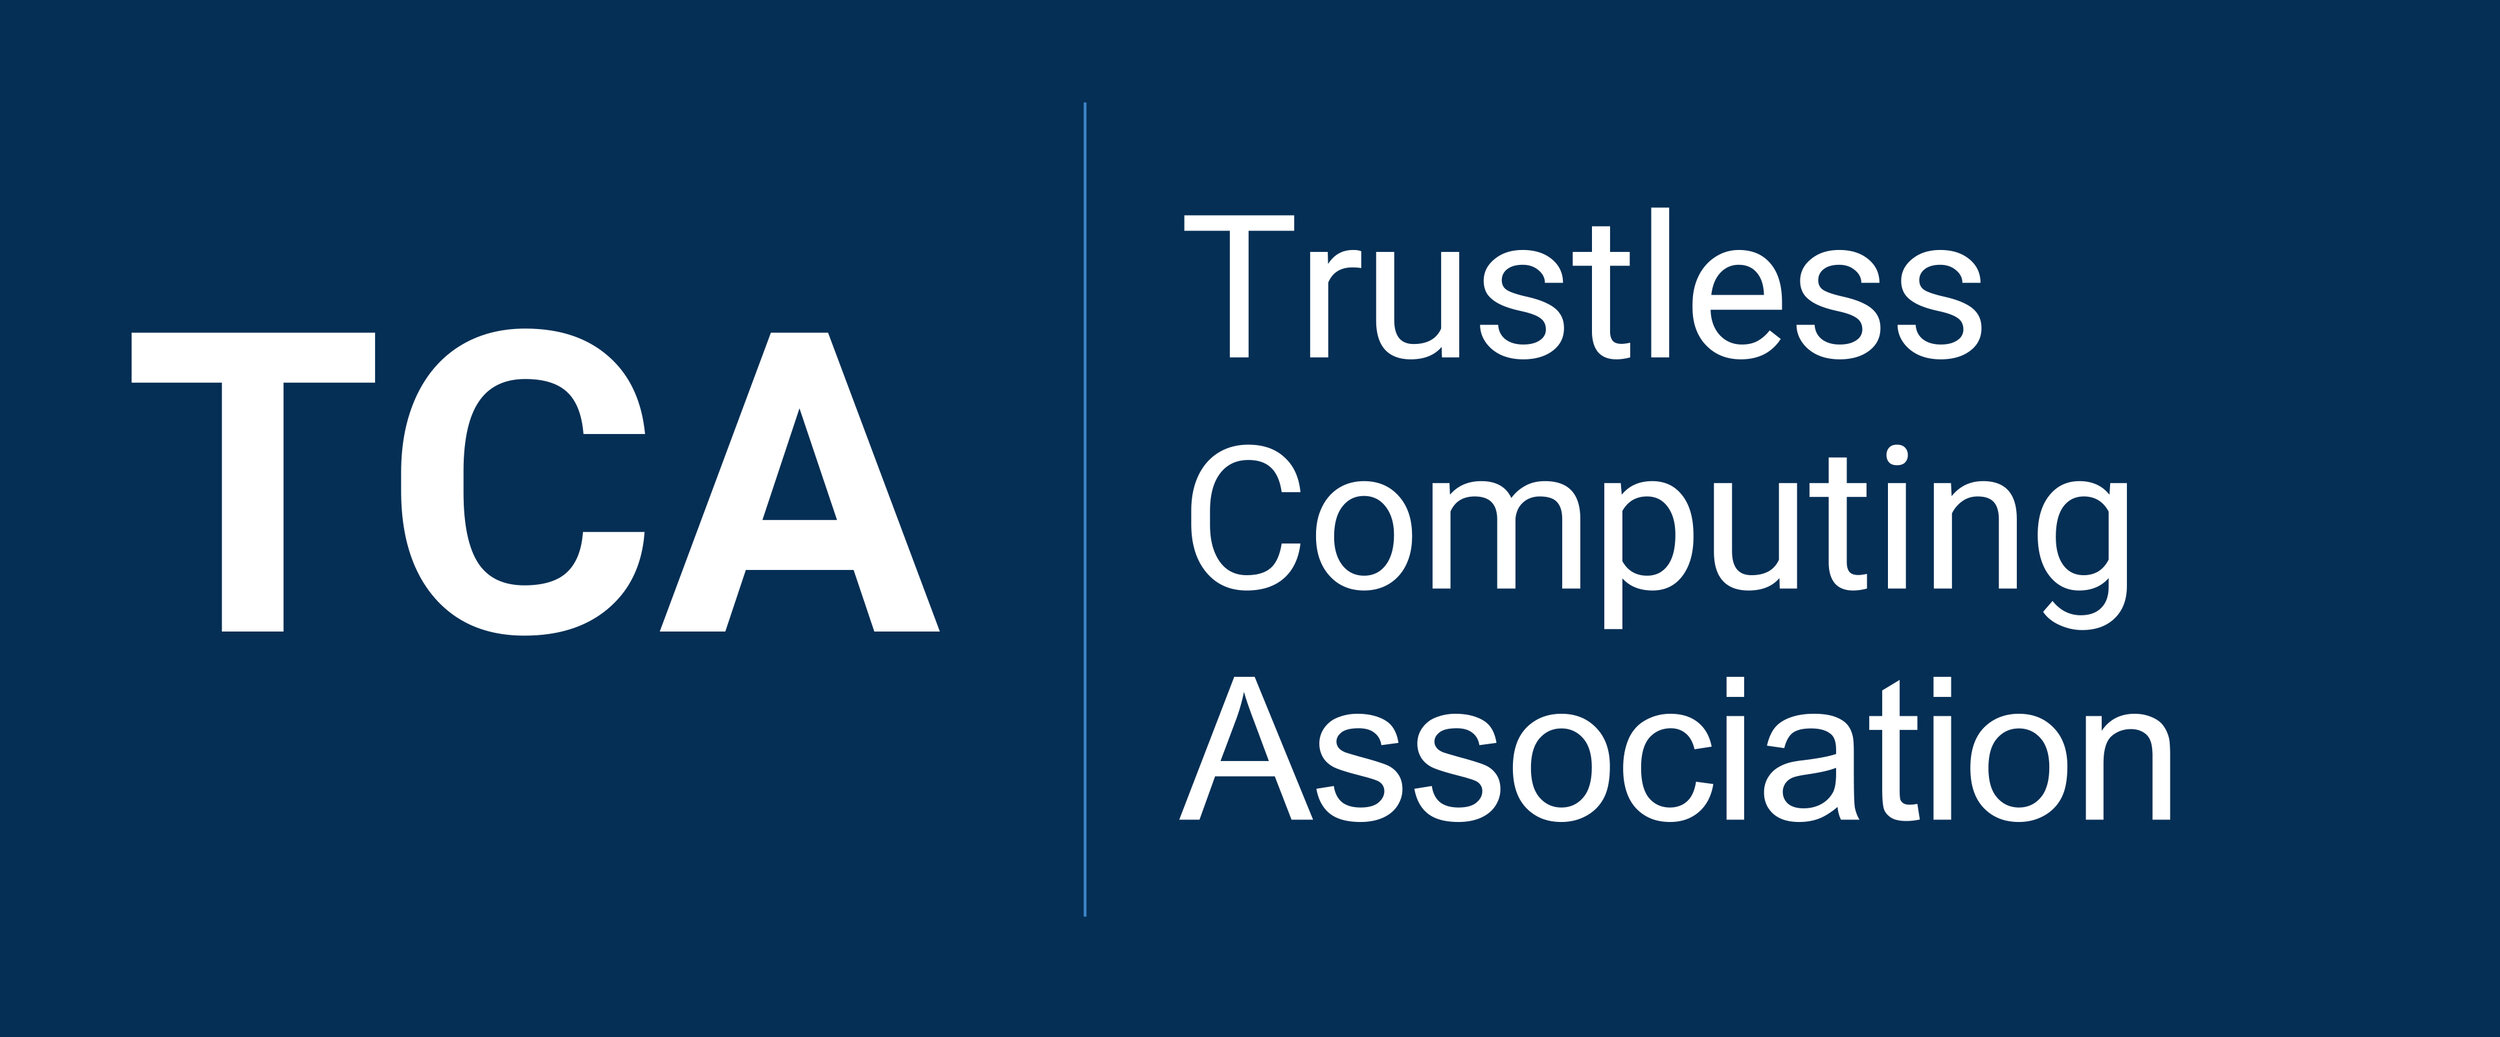 TCA-logo.jpg